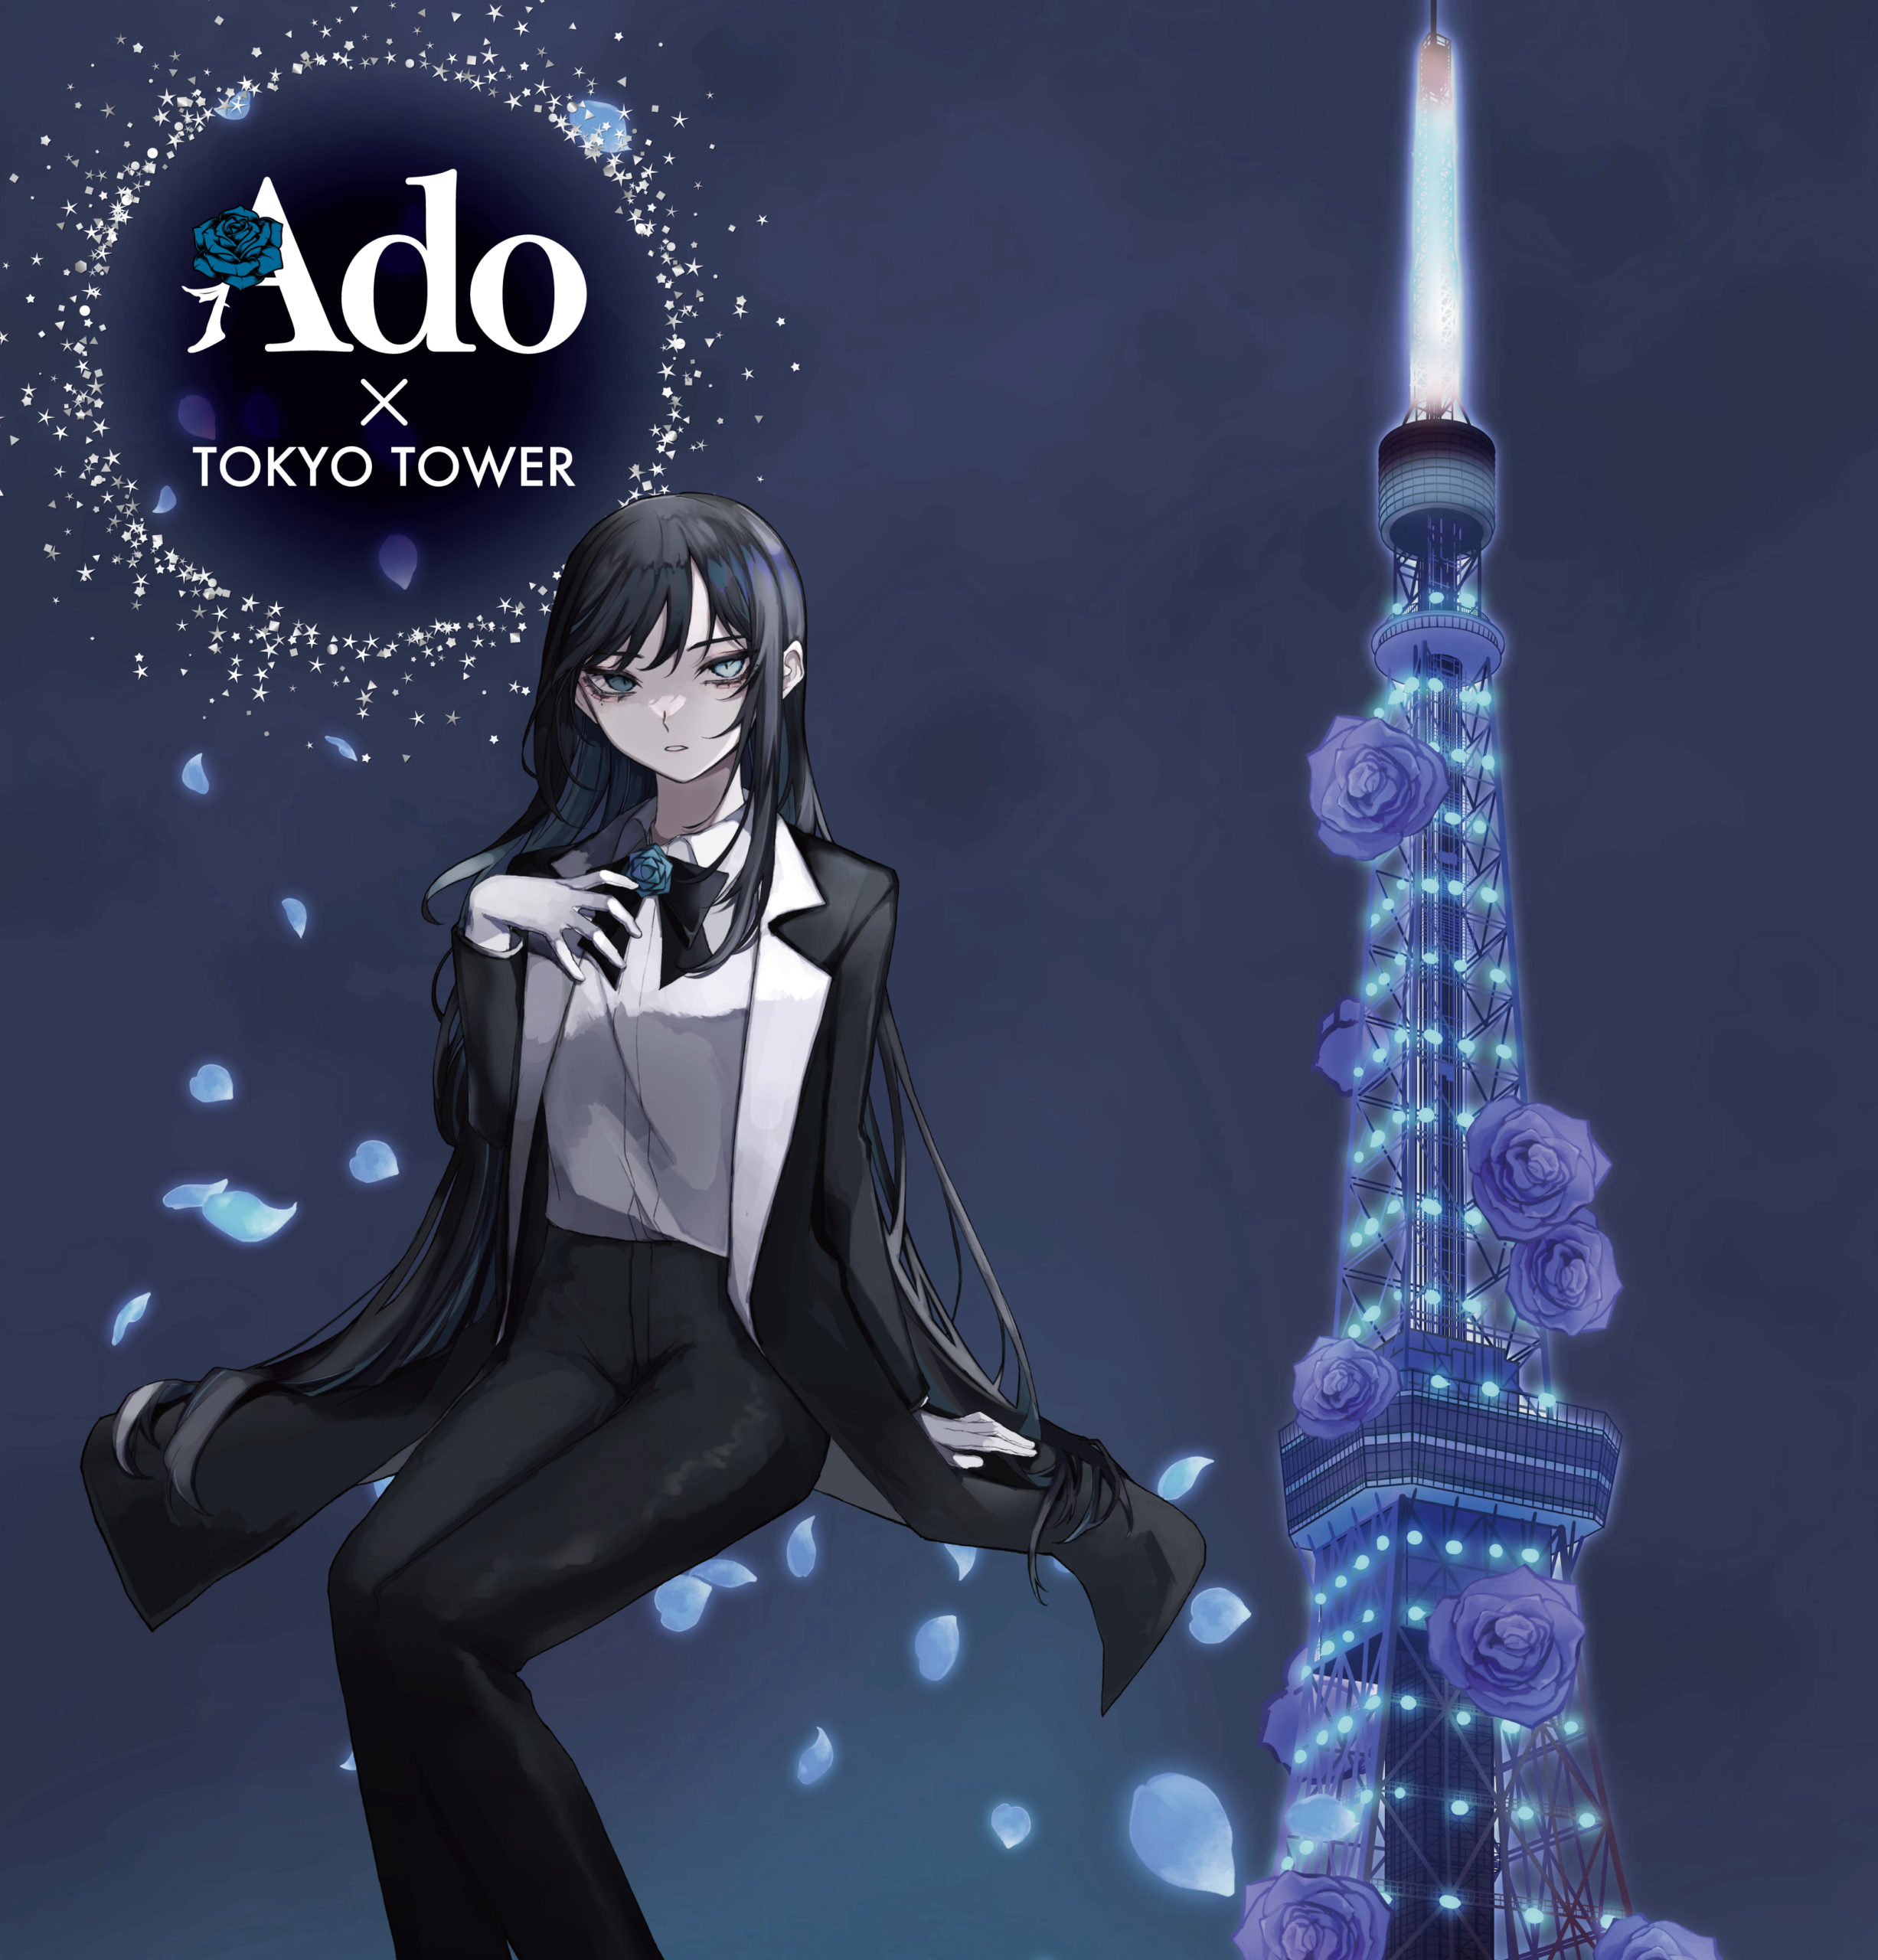 Ado×TOKYO TOWER - DMM エンタメグッズ商品部｜DMM.com